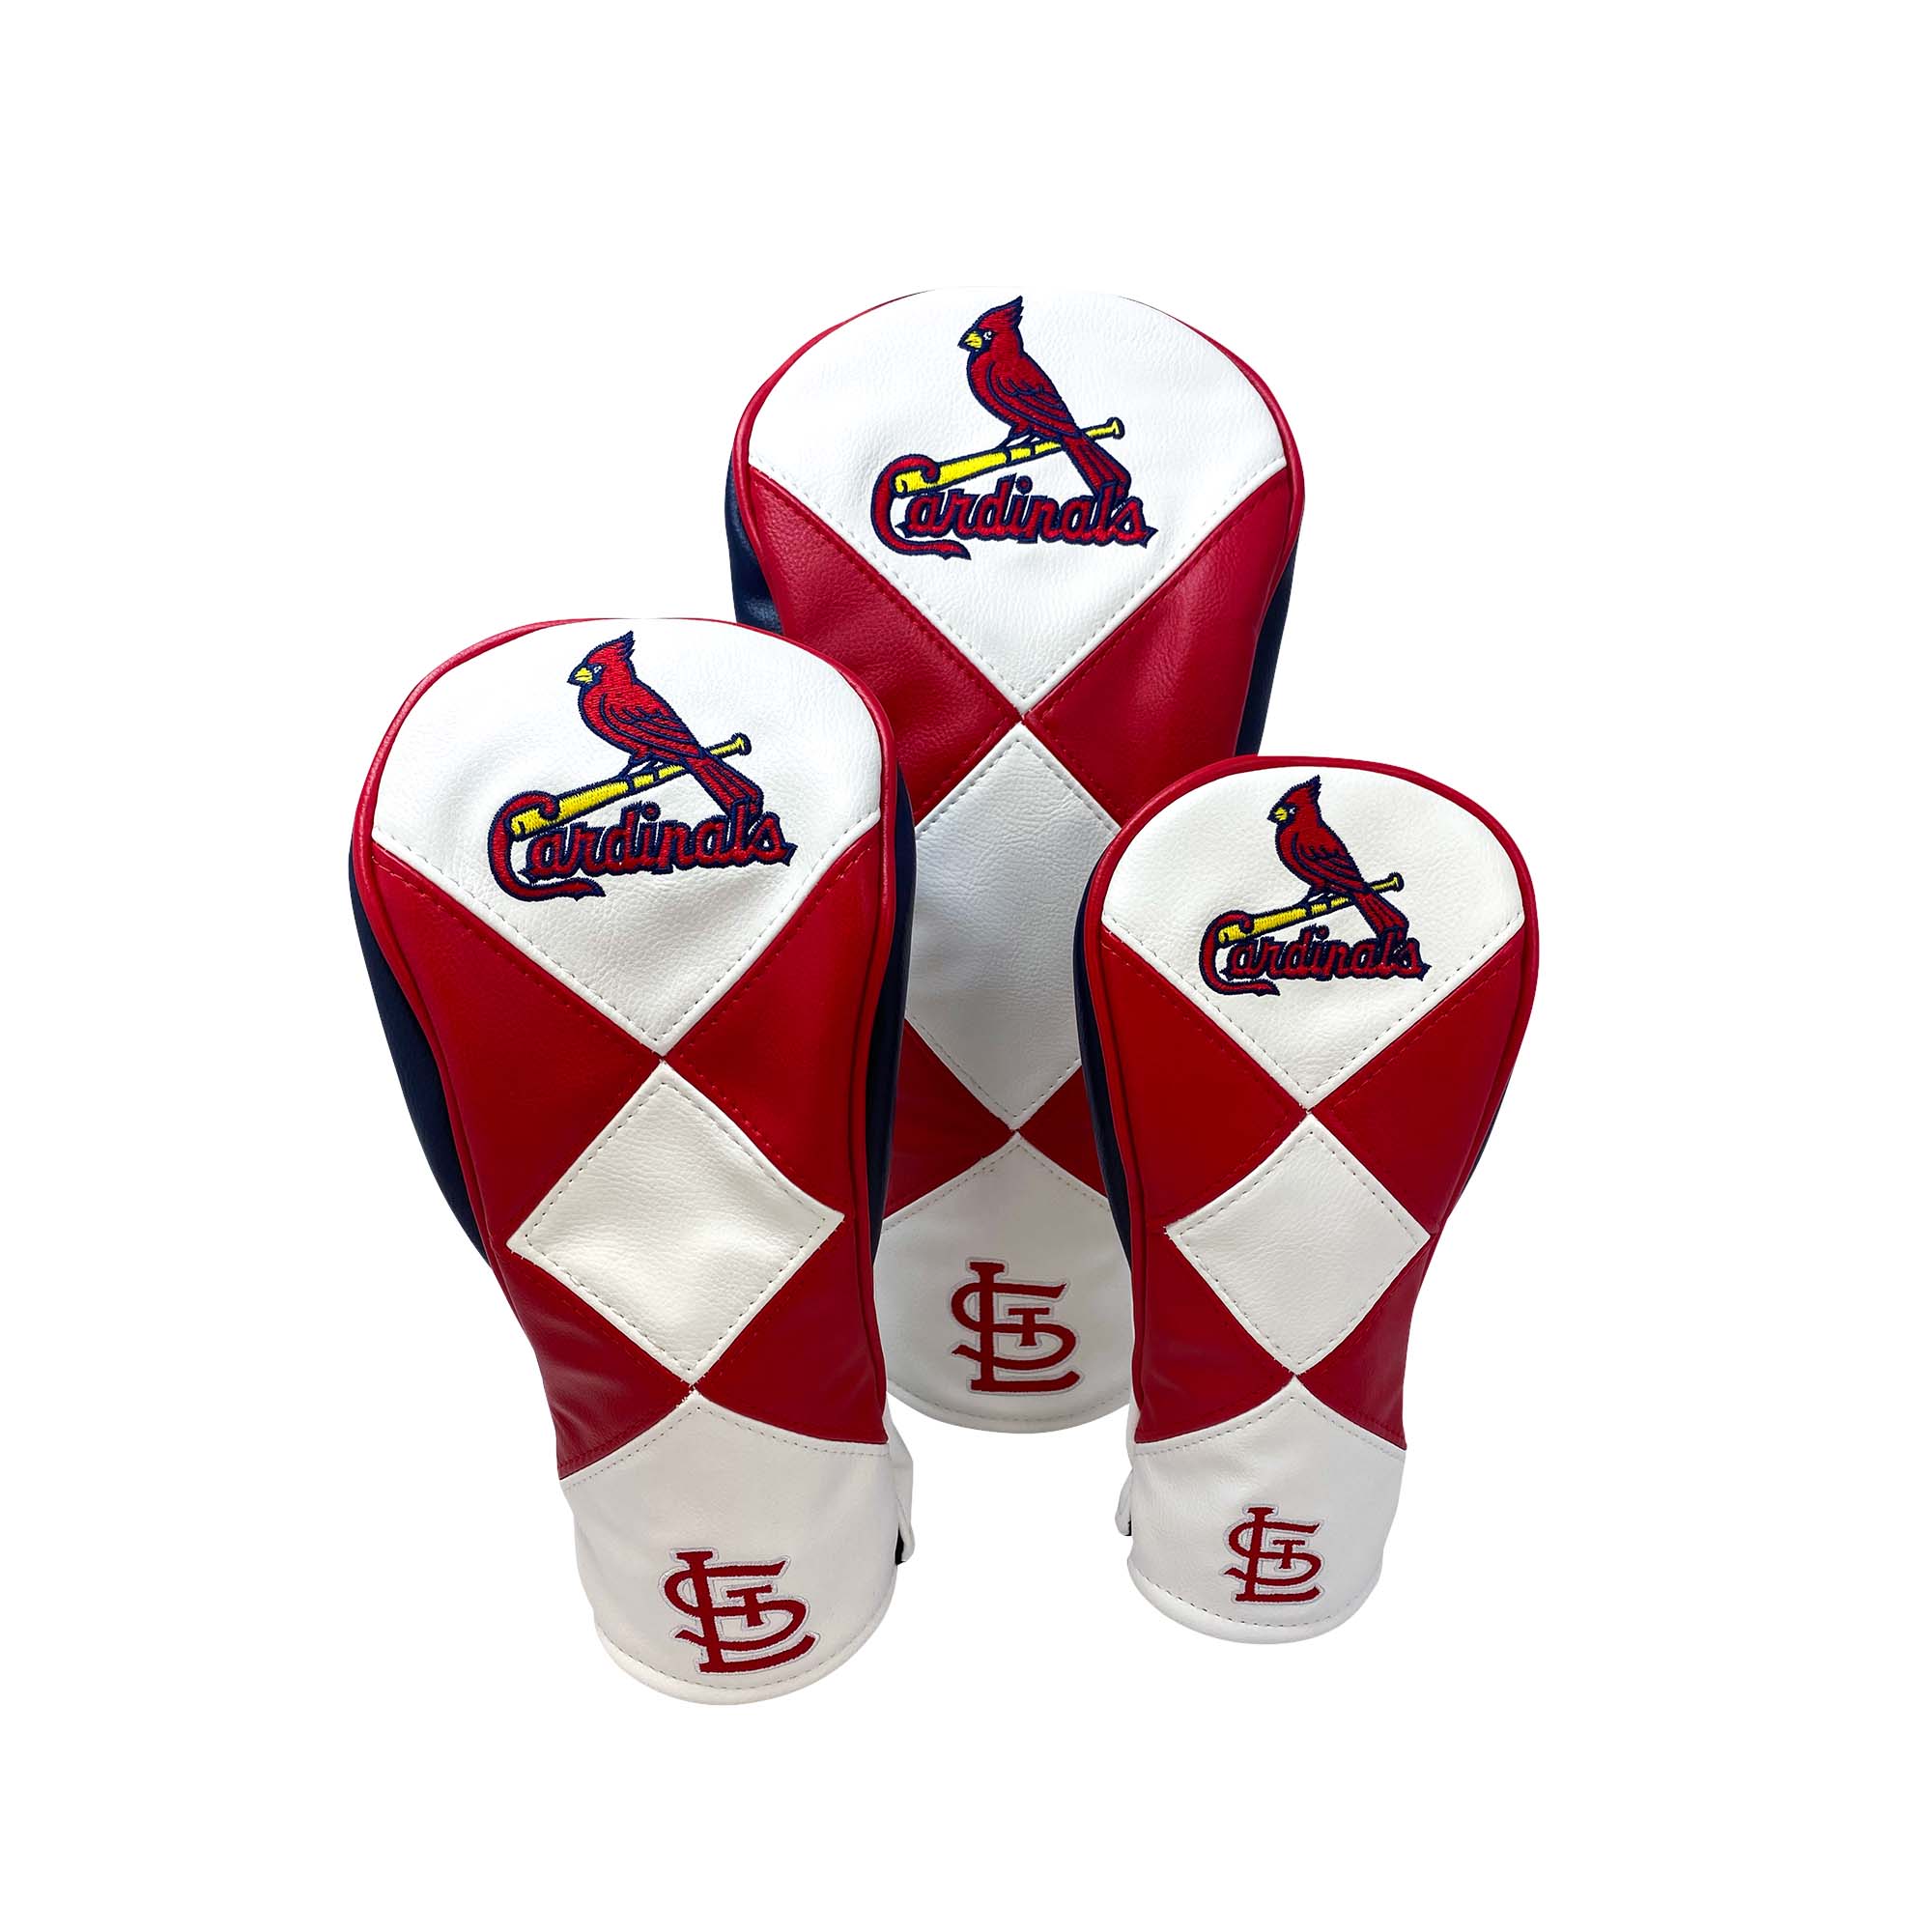 St.Louis Cardinals Hybrid Headcover